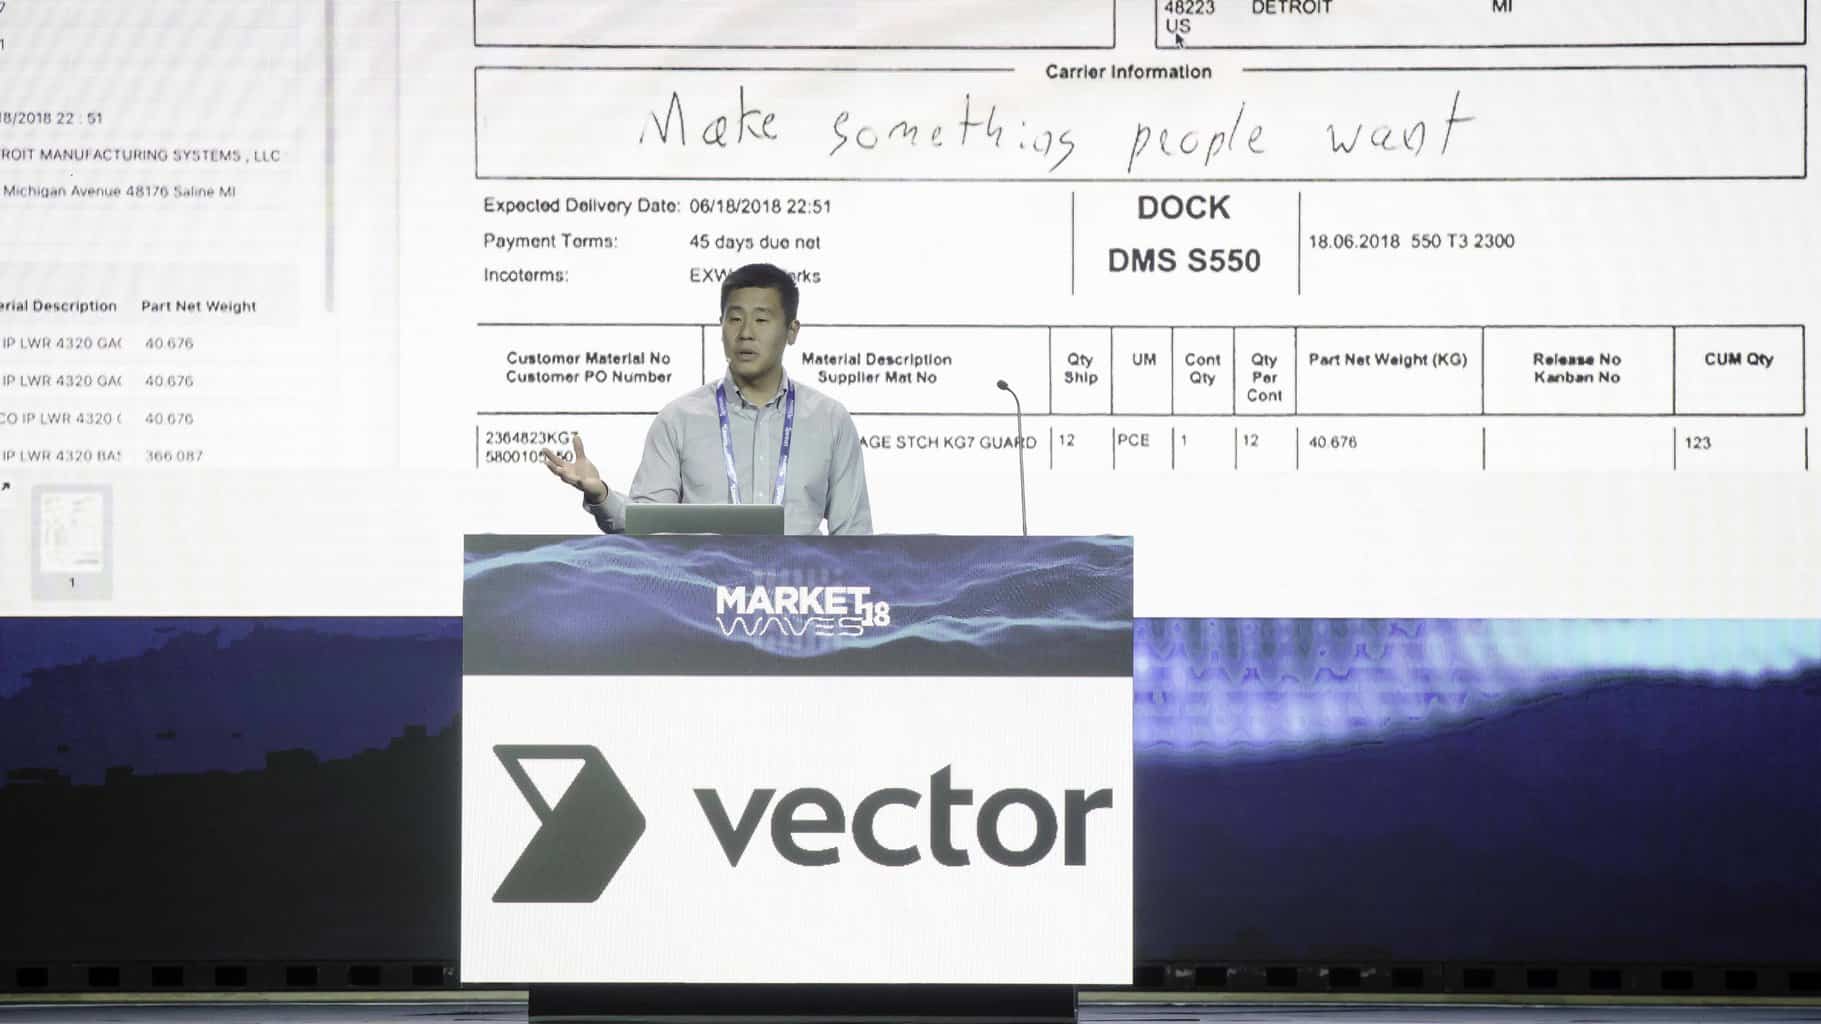 FreightTech 25: Vector is digitizing paperwork to make fleet operations more efficient